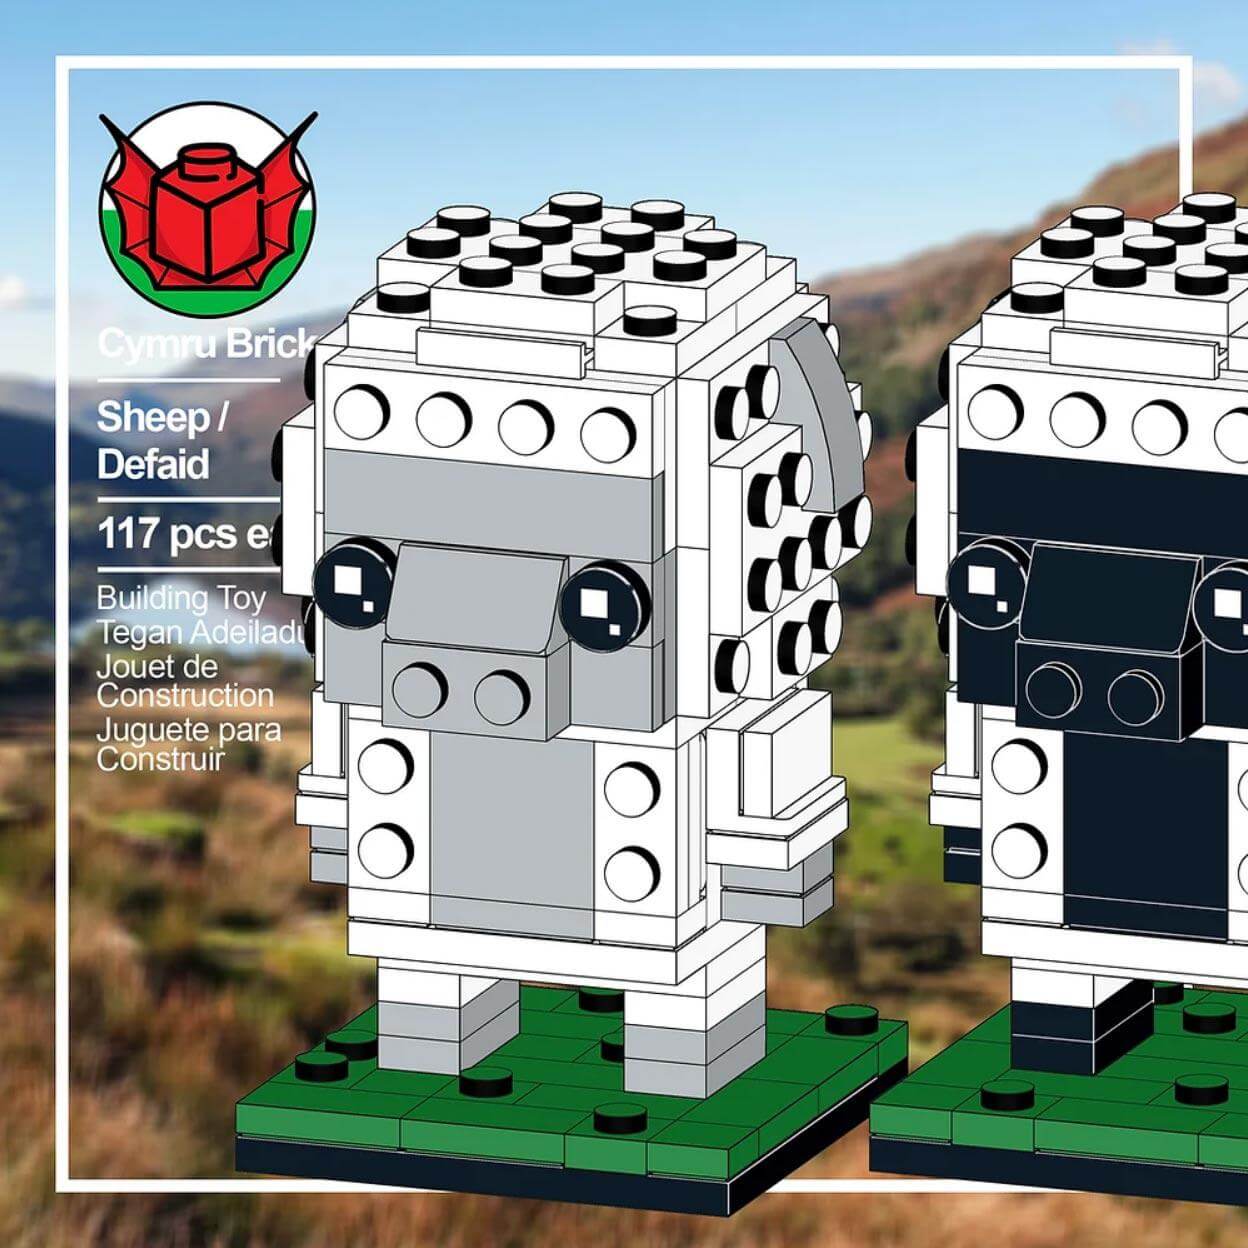 Brick Set - Cymru Bricks - Build Your Own: Welsh Sheep